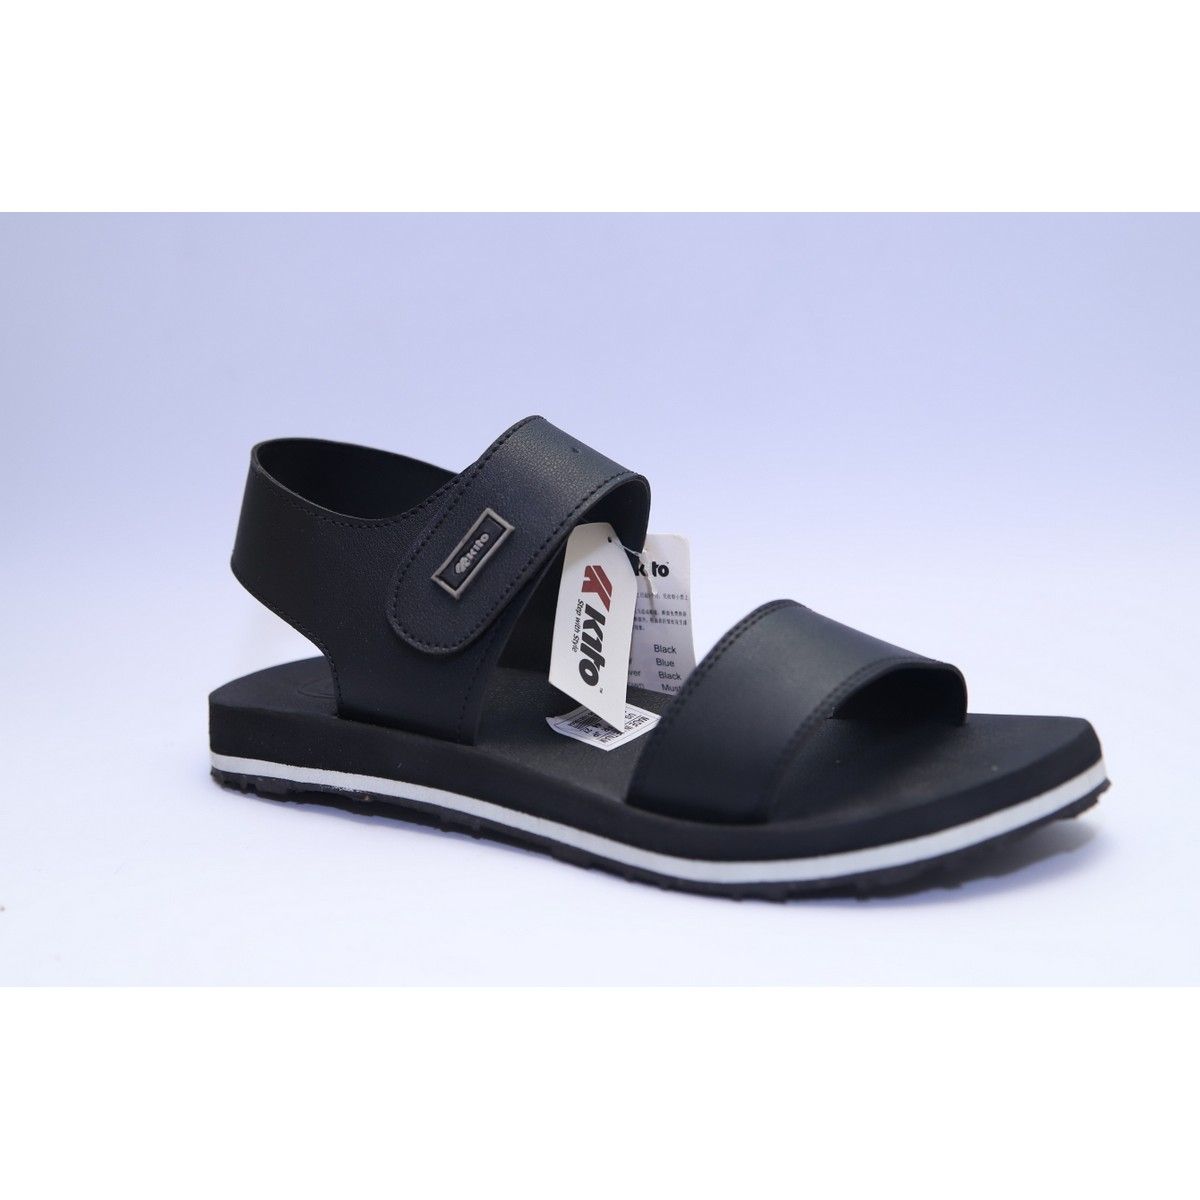 Buy kitto sandal multi colors latest design stylish sandals for men at ...